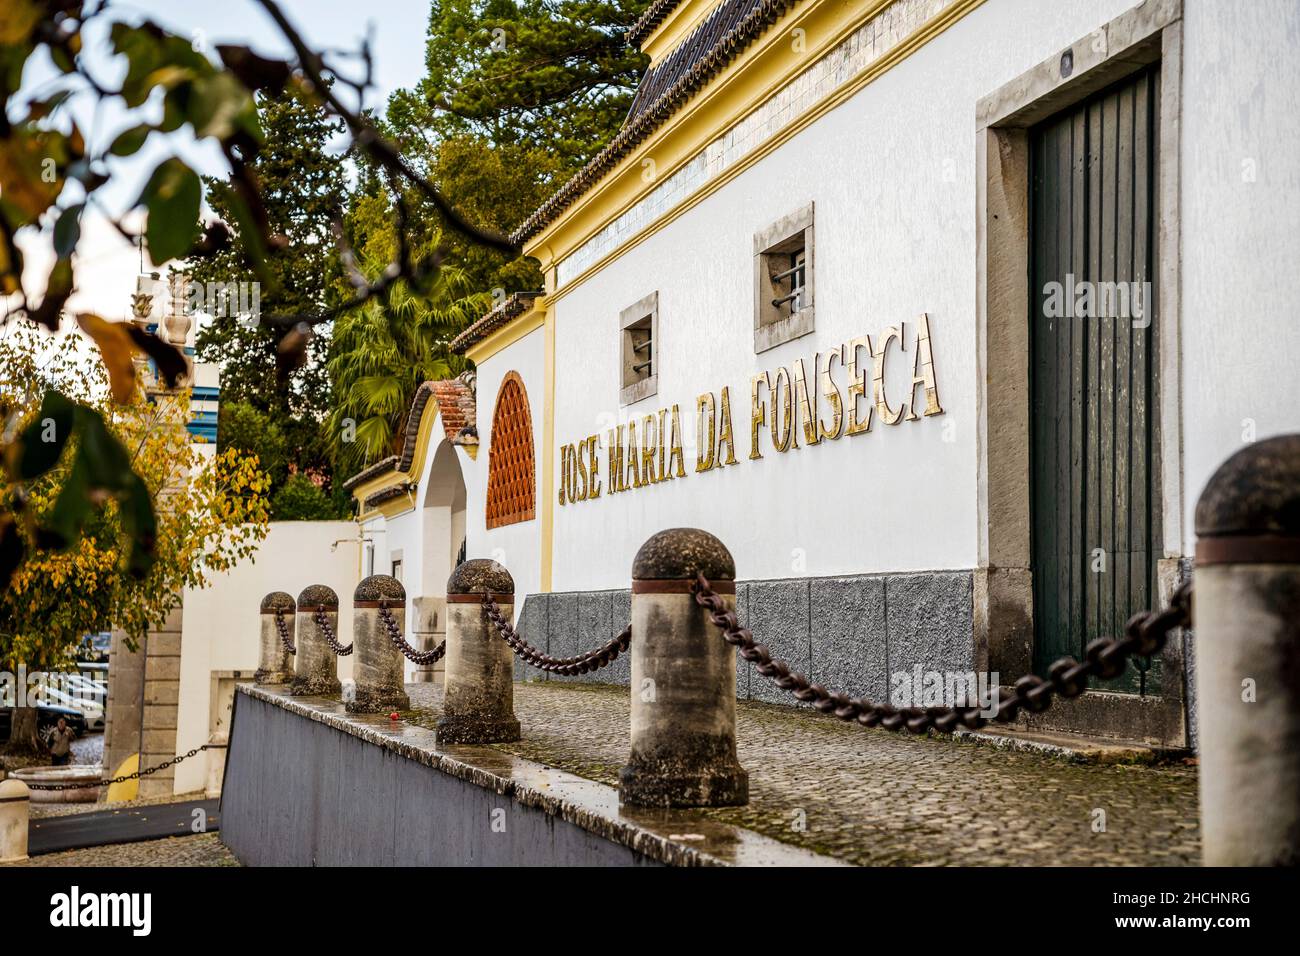 Azeitao, Portugal - November 3, 2021: Sign Jose Maria da Fonseca on the facade of famous winery in Lisbon Metropolitan Area Stock Photo